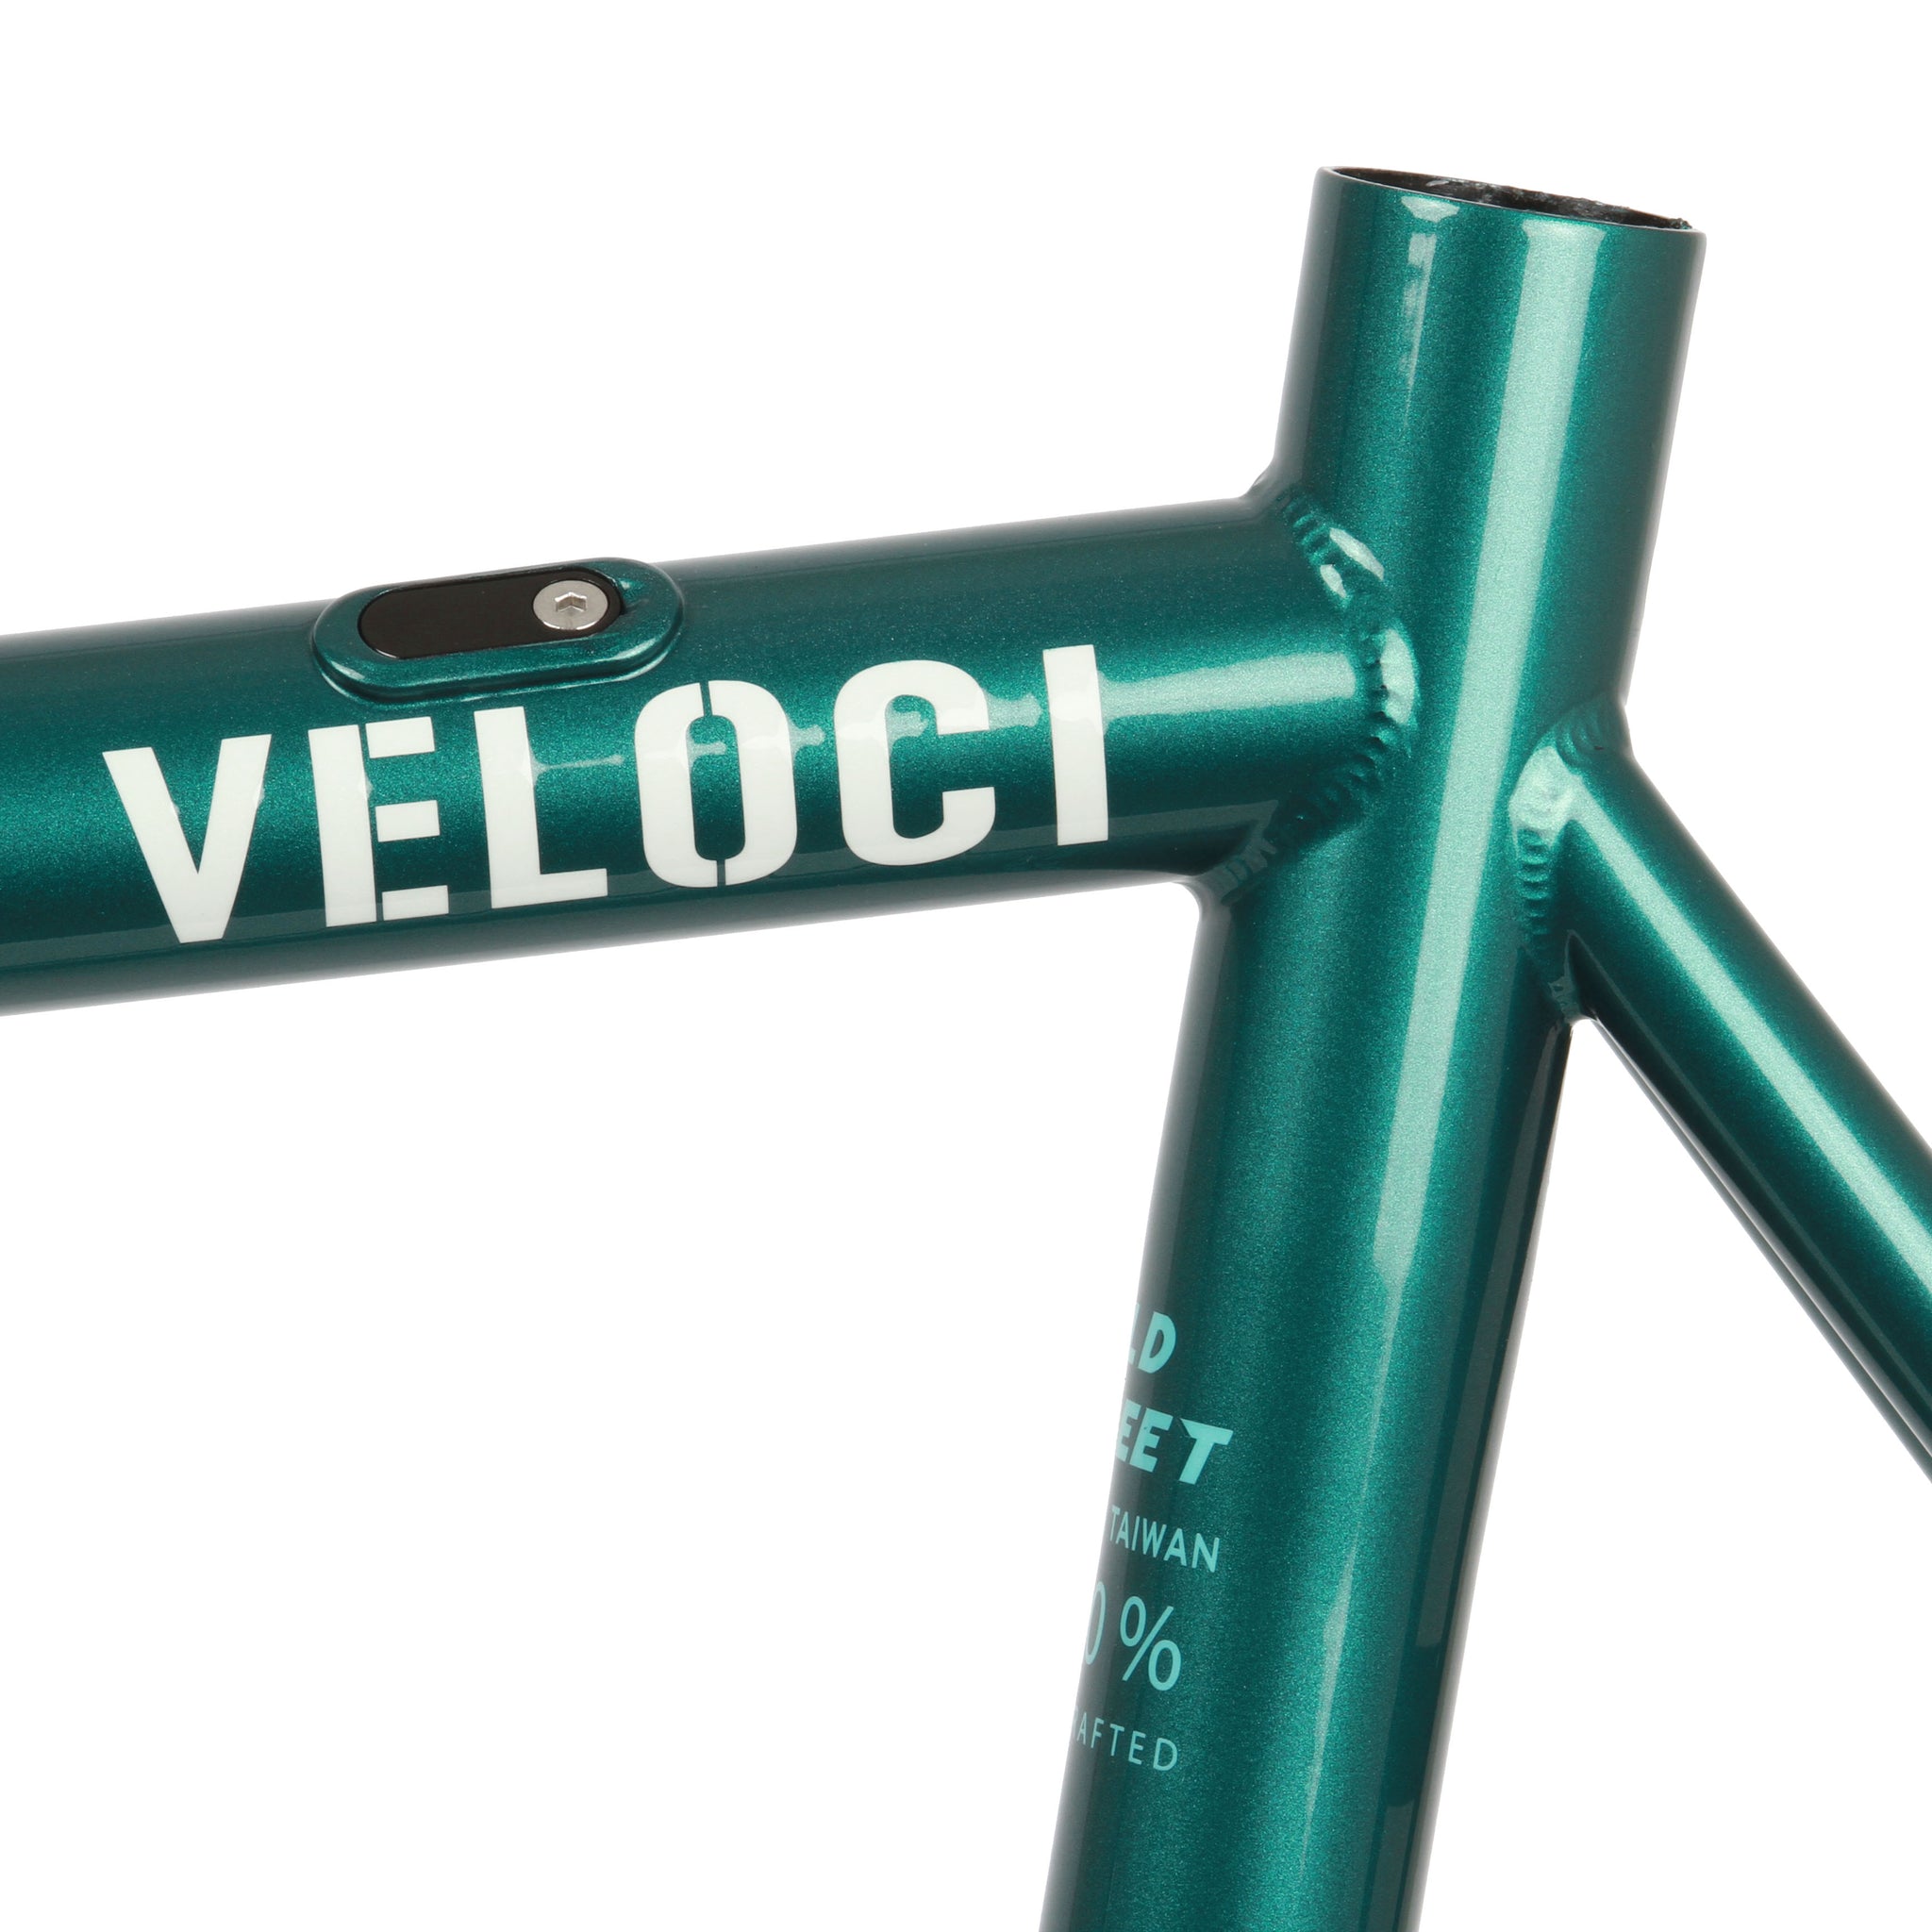 Veloci Old Street V1.1 frameset - Maxi Teal - Retrogression Fixed Gear